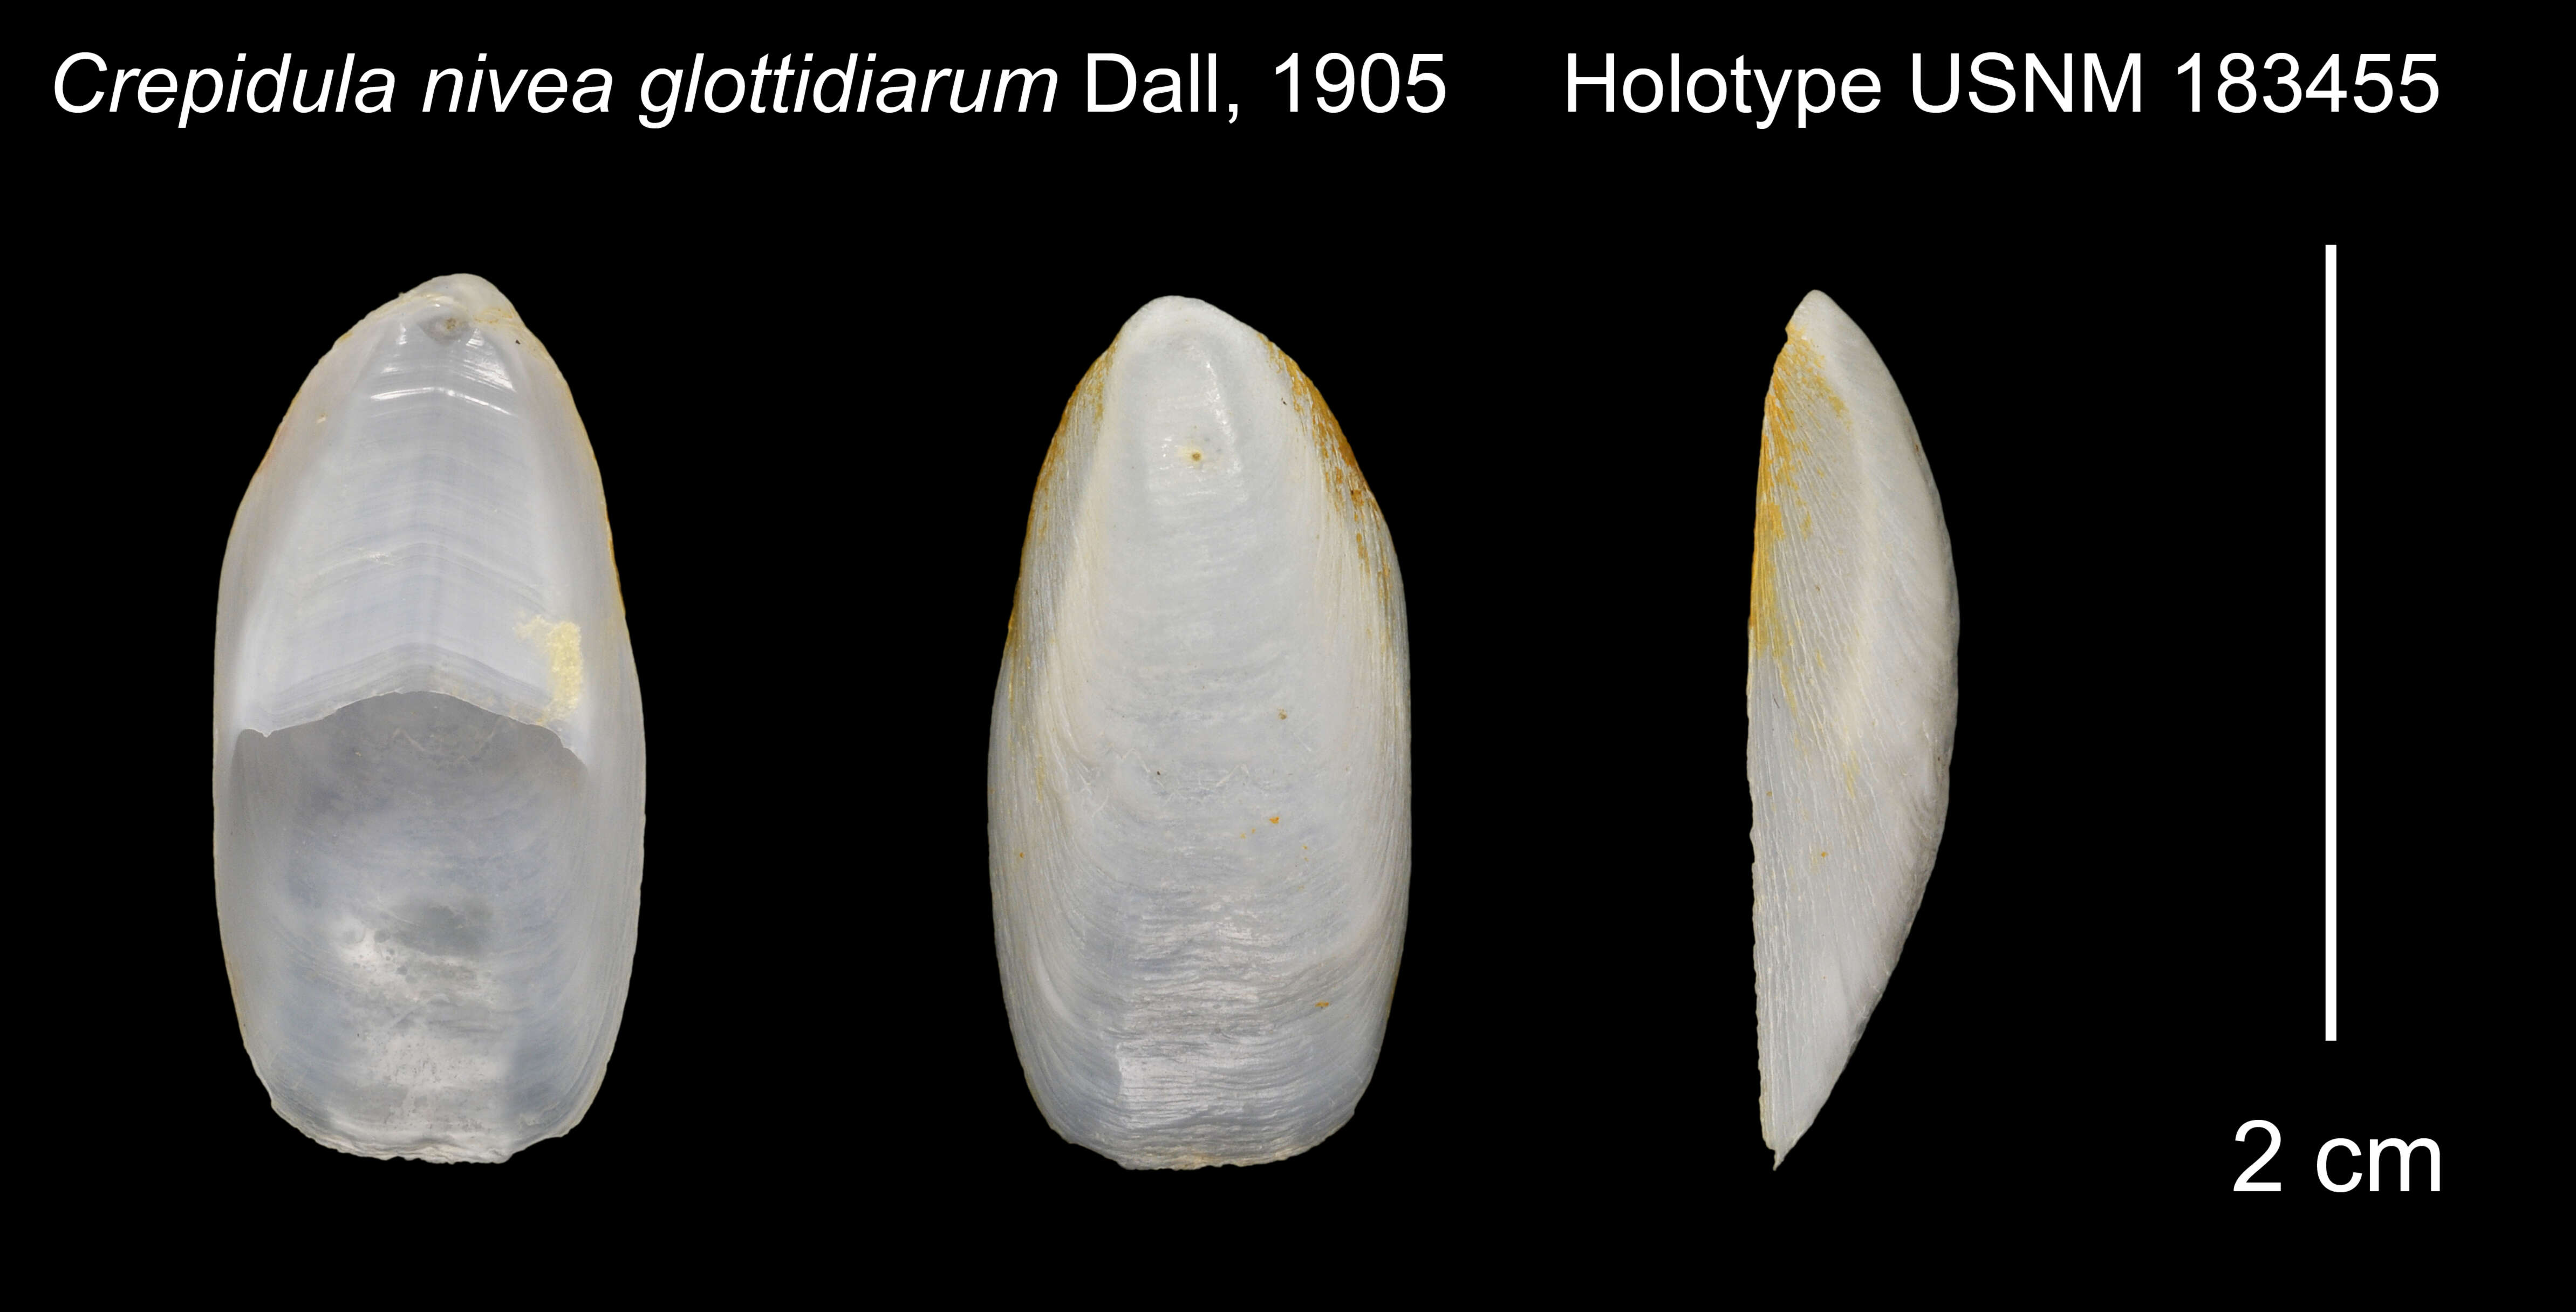 Image of Crepidula glottidiarum Dall 1905